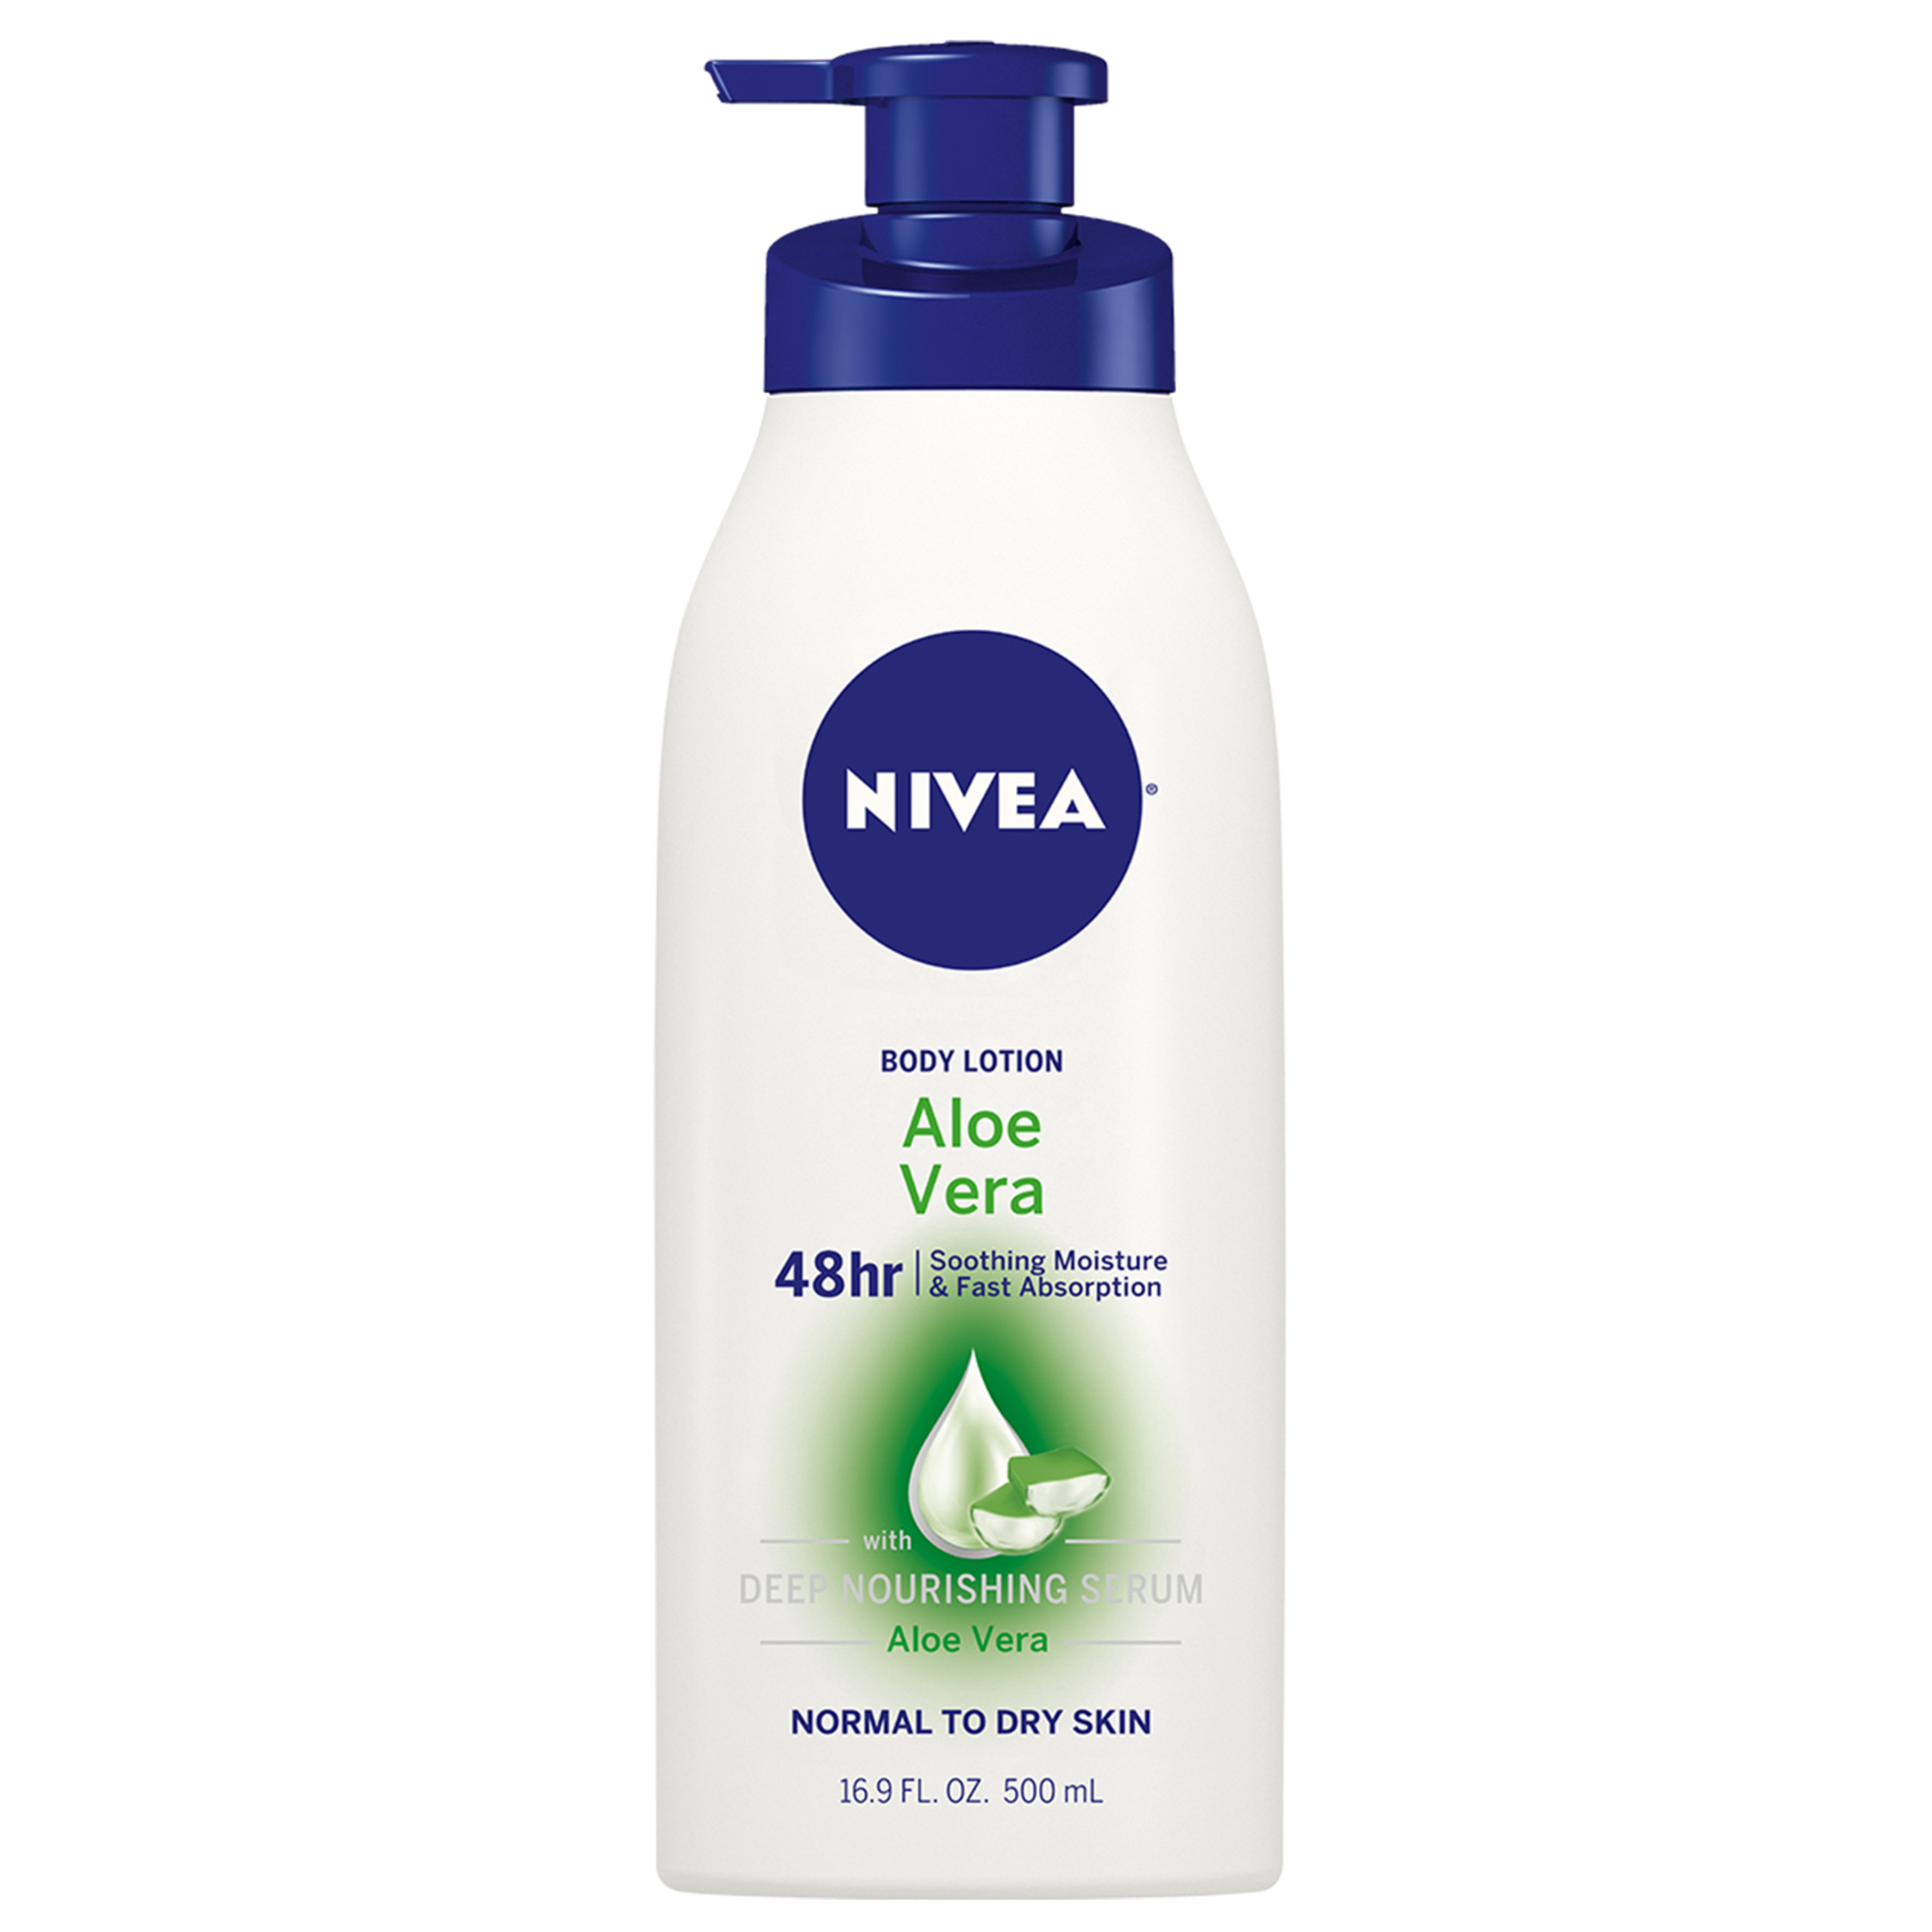 NIVEA Aloe Vera Body Lotion with Deep Nourishing Serum, 16.9 Fl Oz Bottle - image 1 of 6